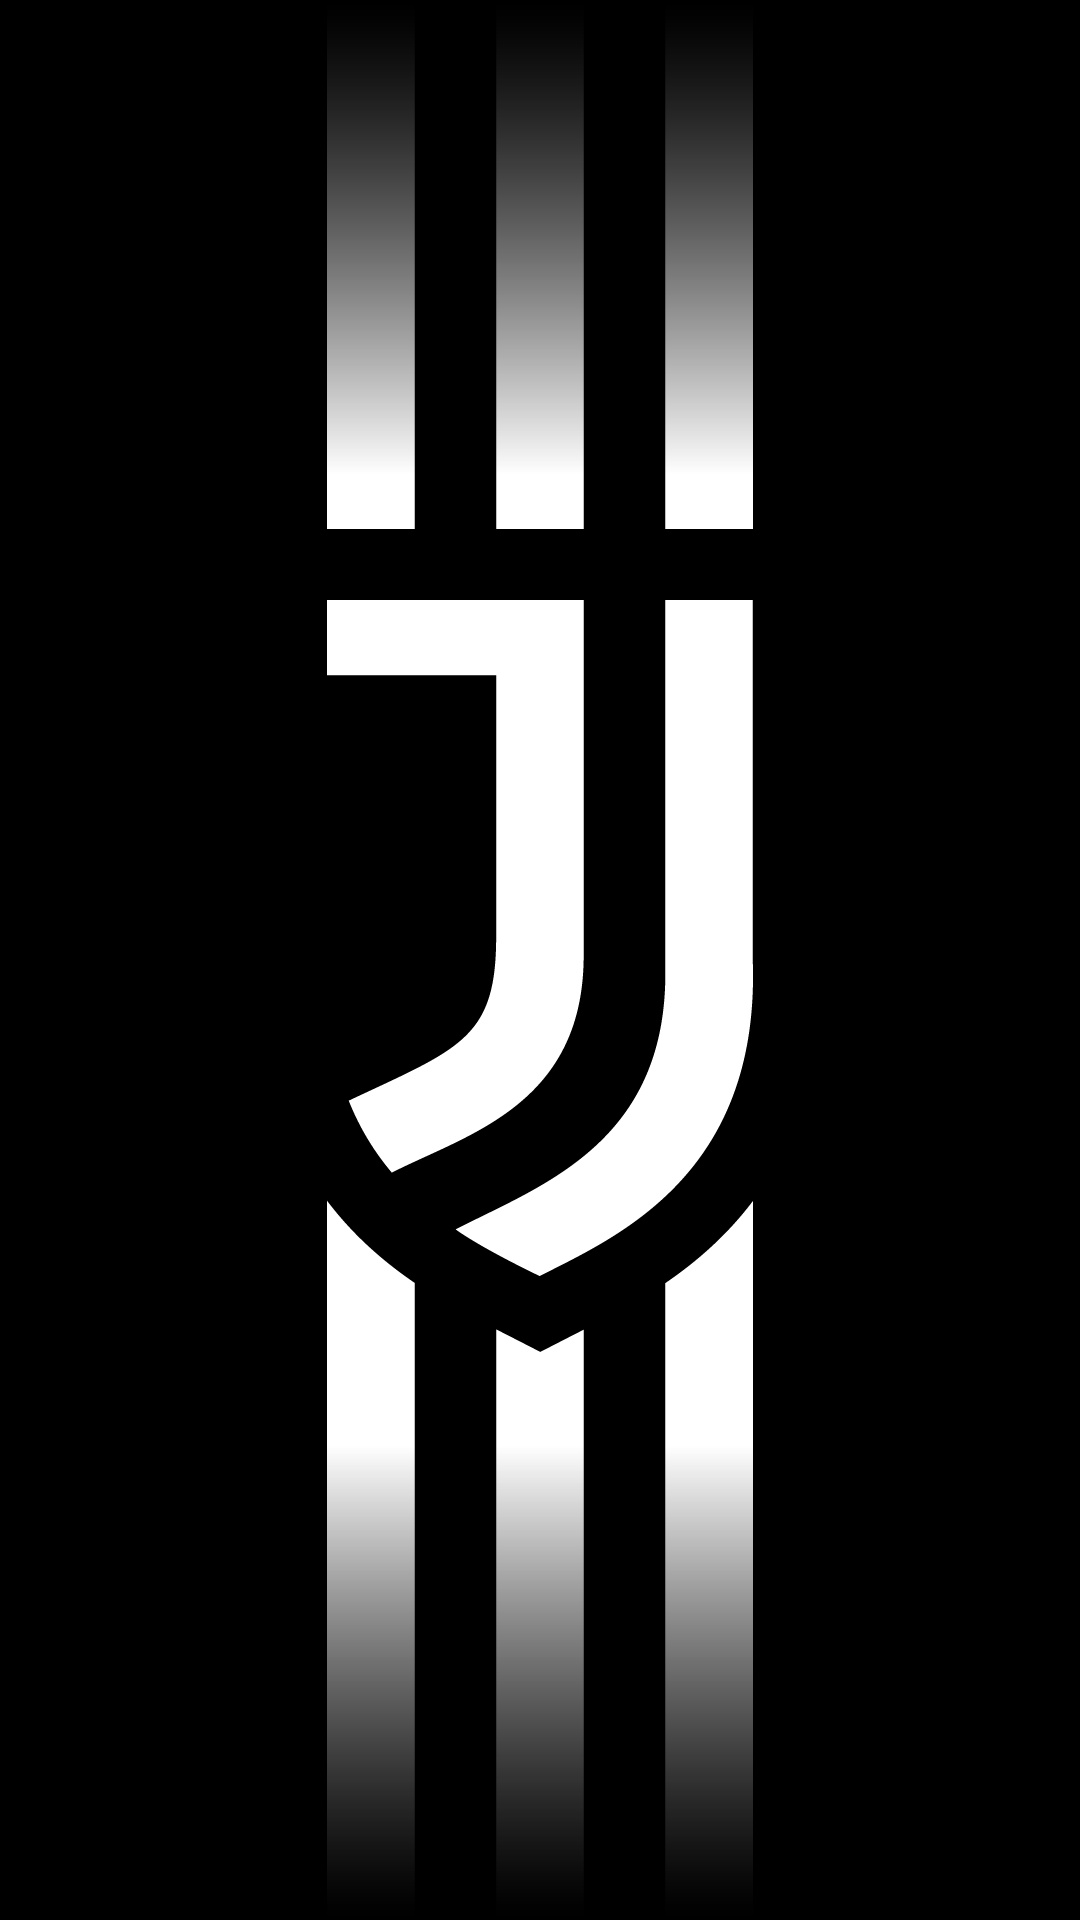 Juventus logo wallpapers, 4K HD, 1080x1920 Full HD Phone